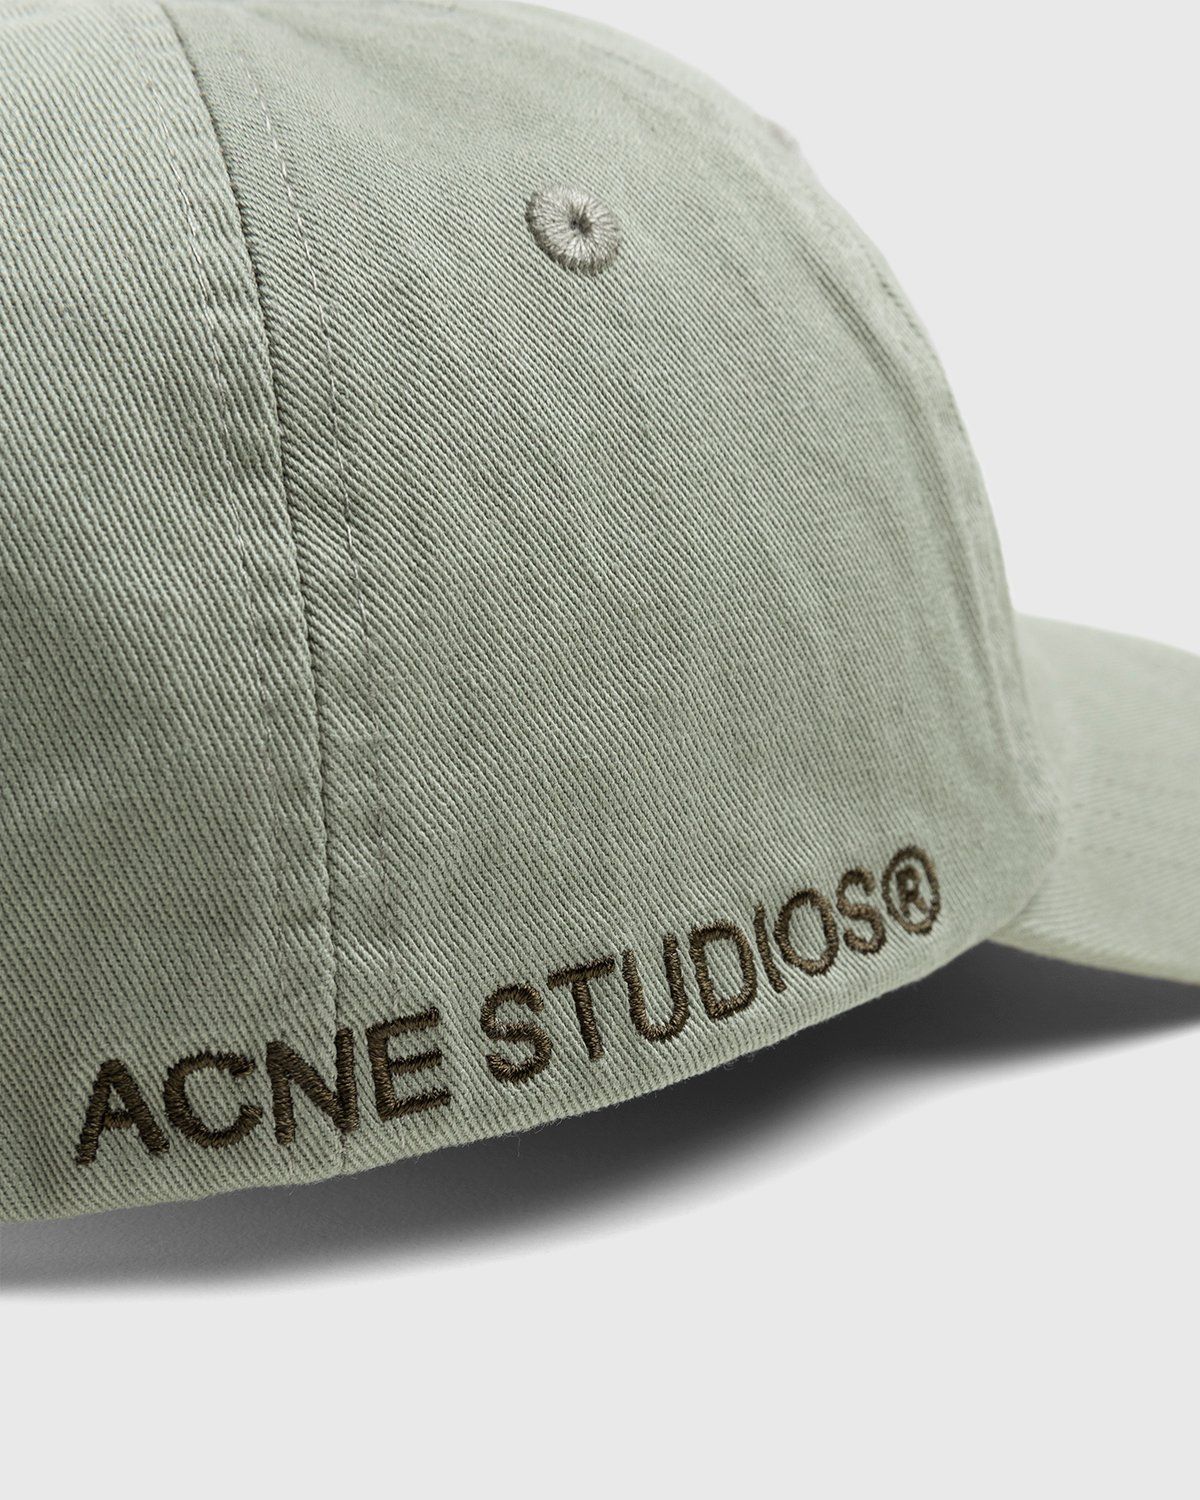 Acne Studios – Cotton Baseball Cap Sage Green | Highsnobiety Shop